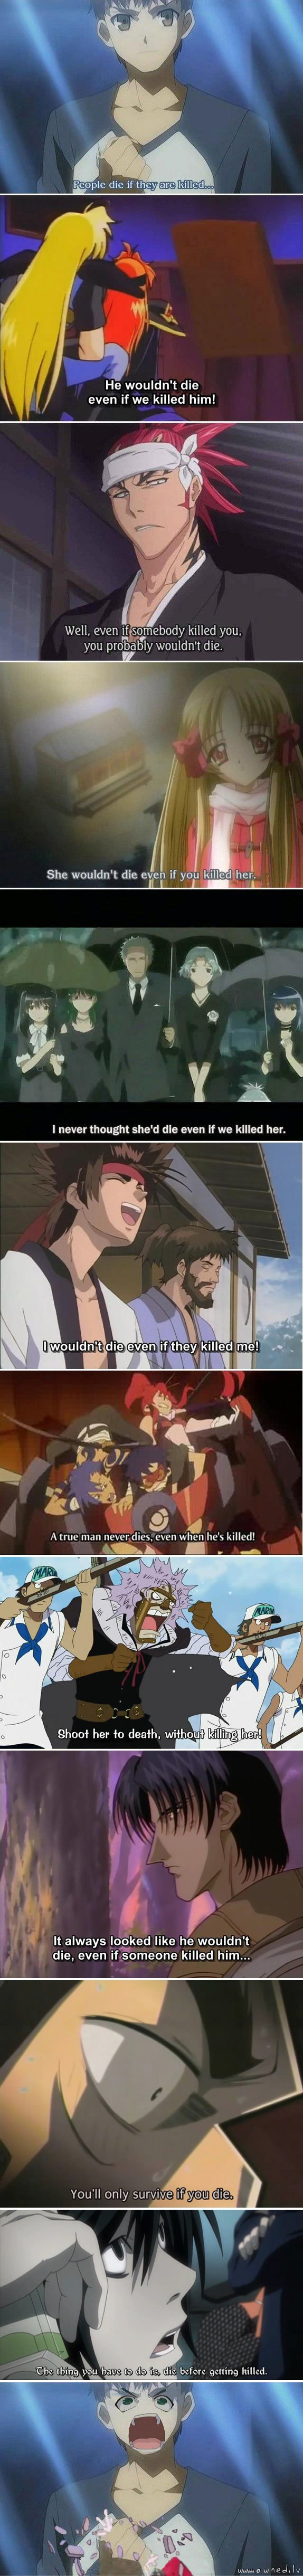 Anime logic